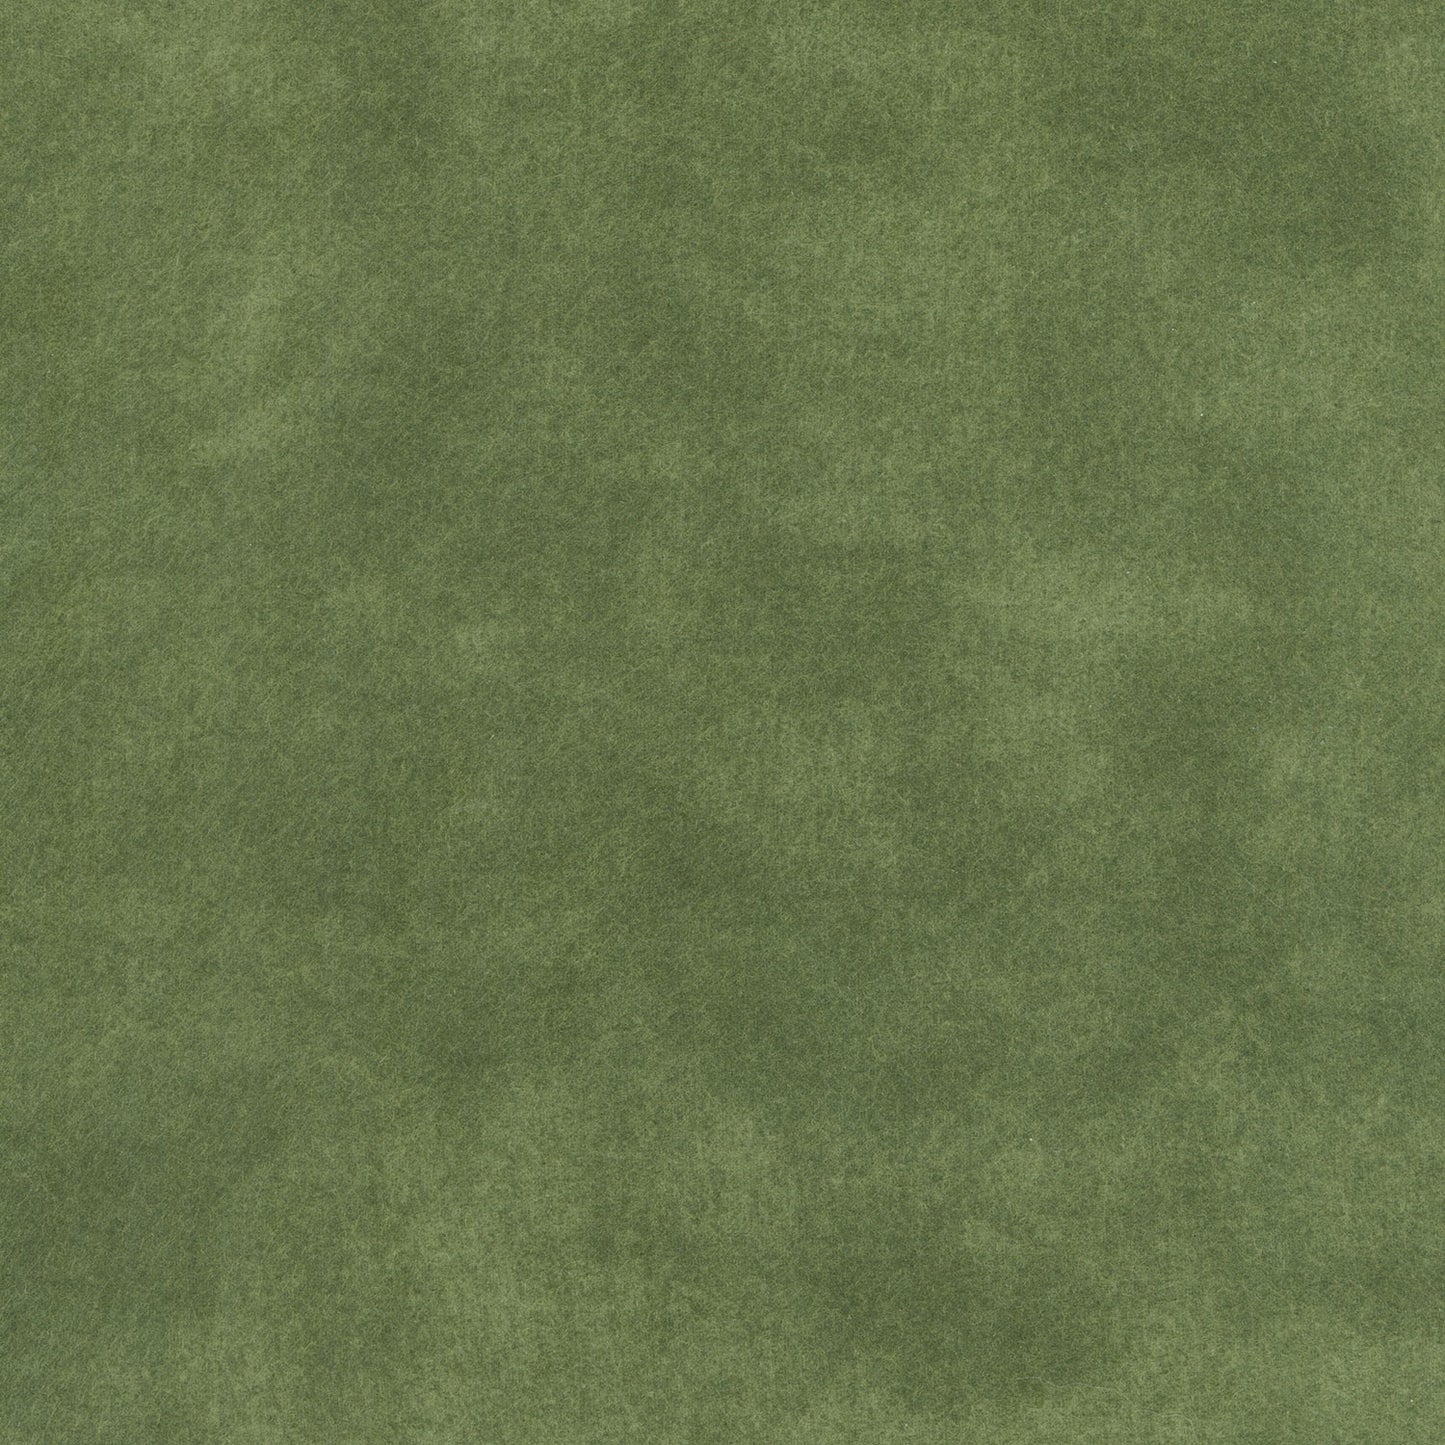 Woolies Flannel - Colorwash - Dark Green Yardage Primary Image